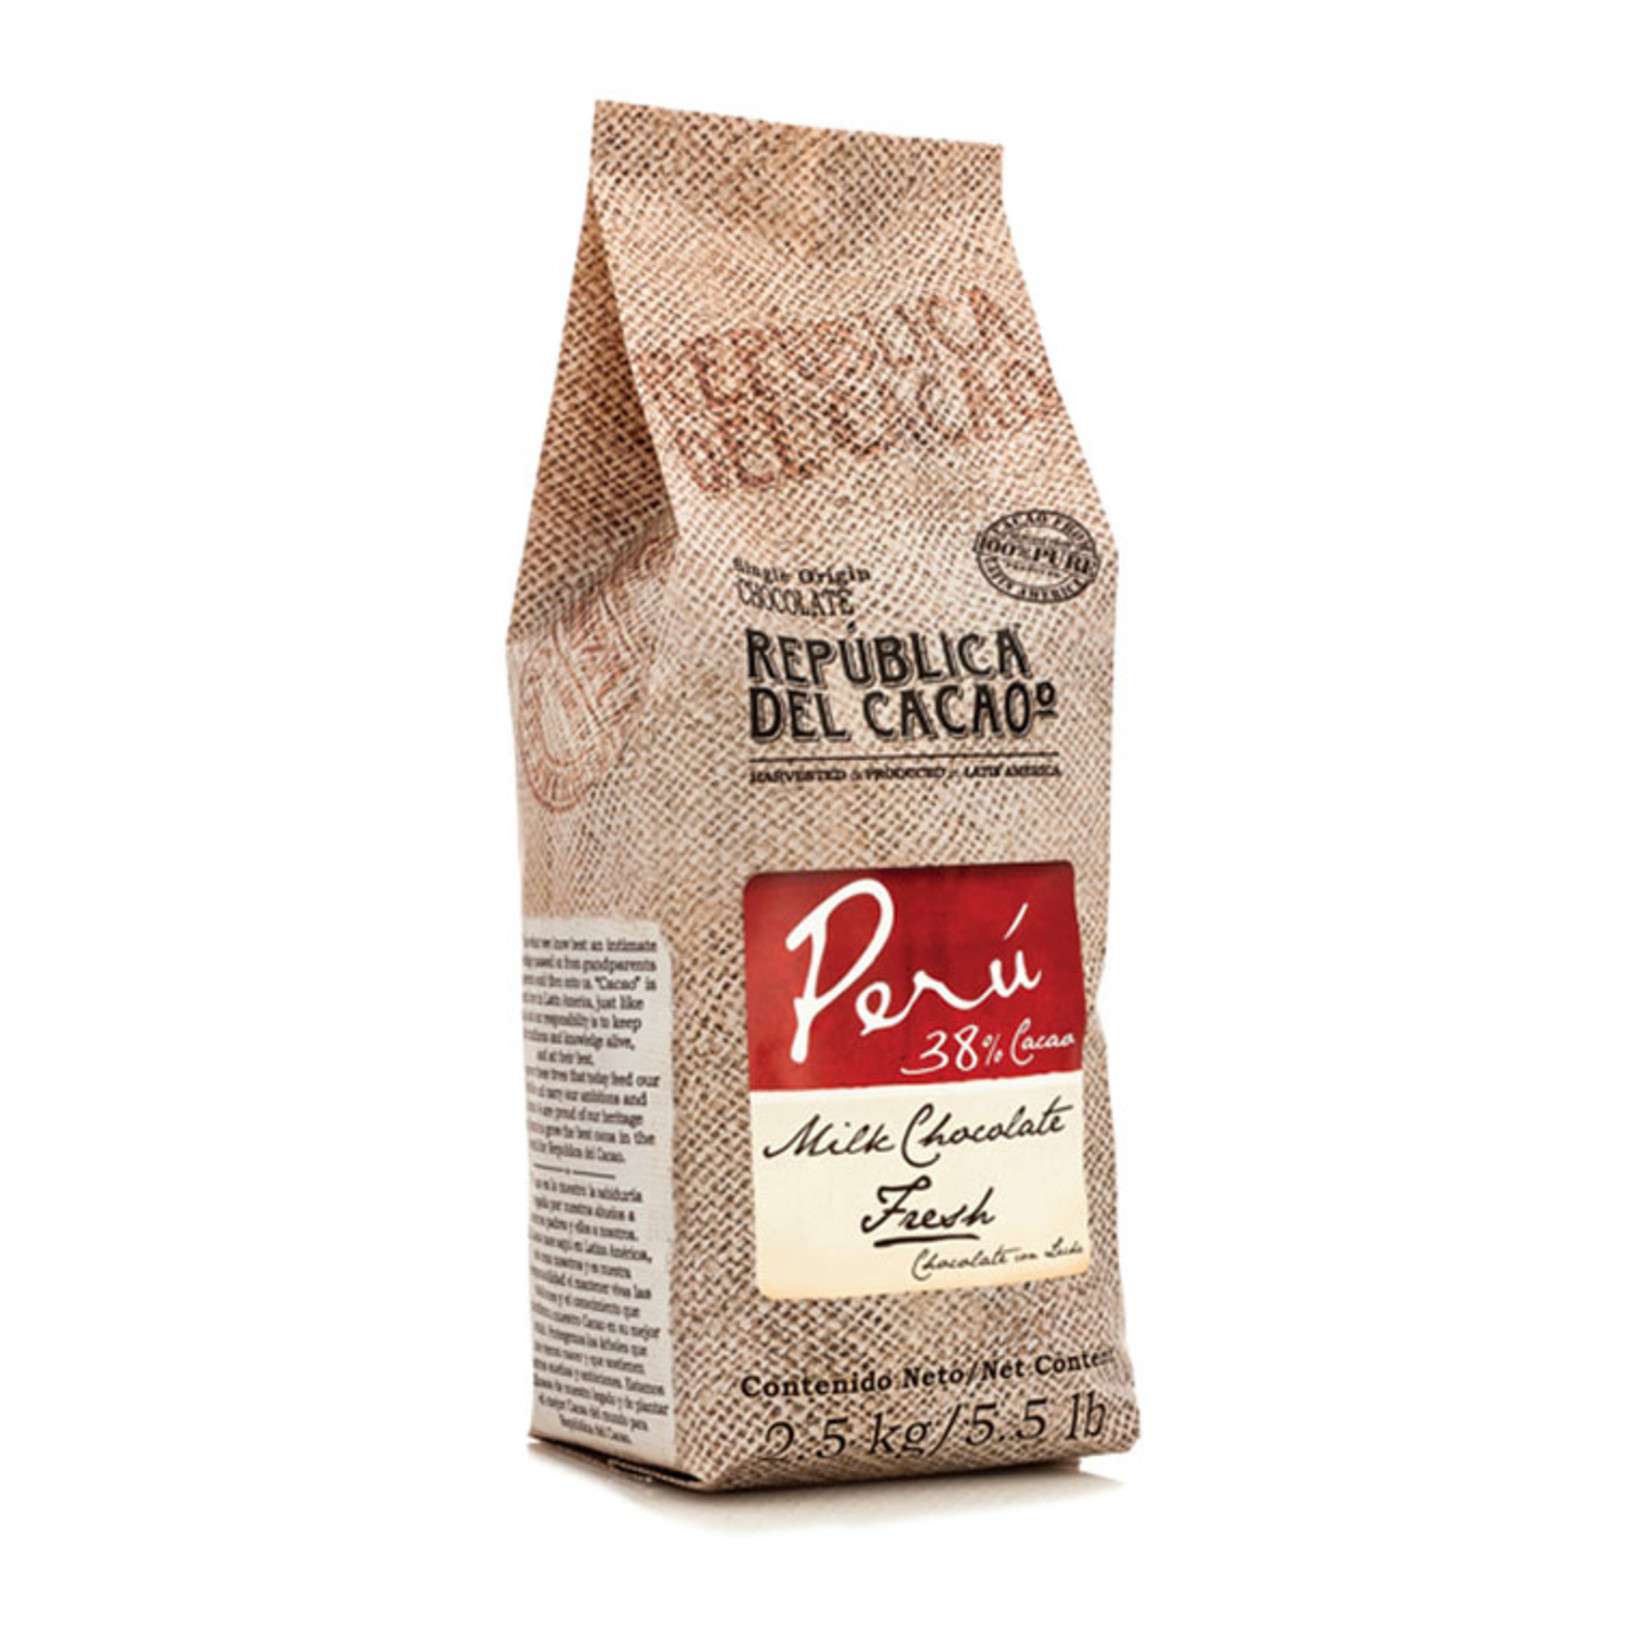 Republica del Cacao Republica del  Cacao - Peru Milk  Chocolate 38% - 5.5 lb